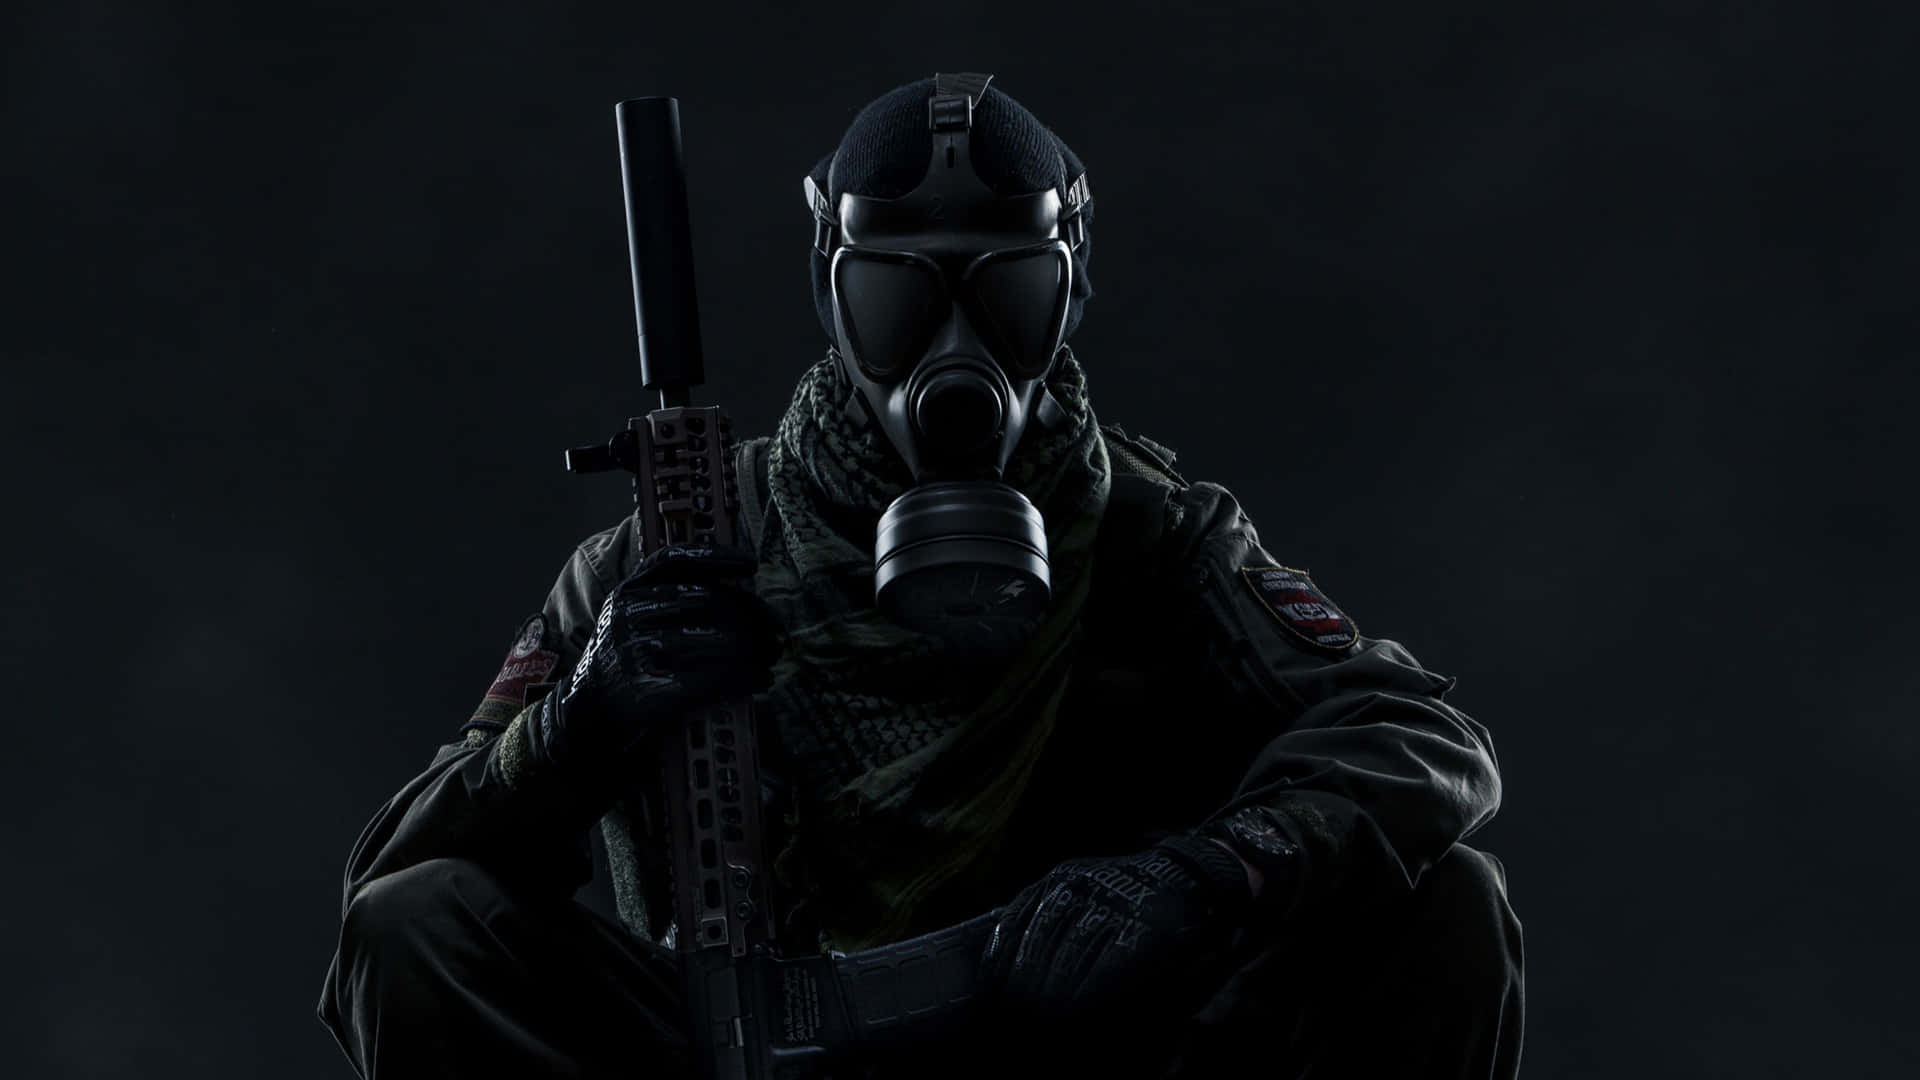 4kghost Recon Gas Mask Soldat Dunkles Poster. Wallpaper